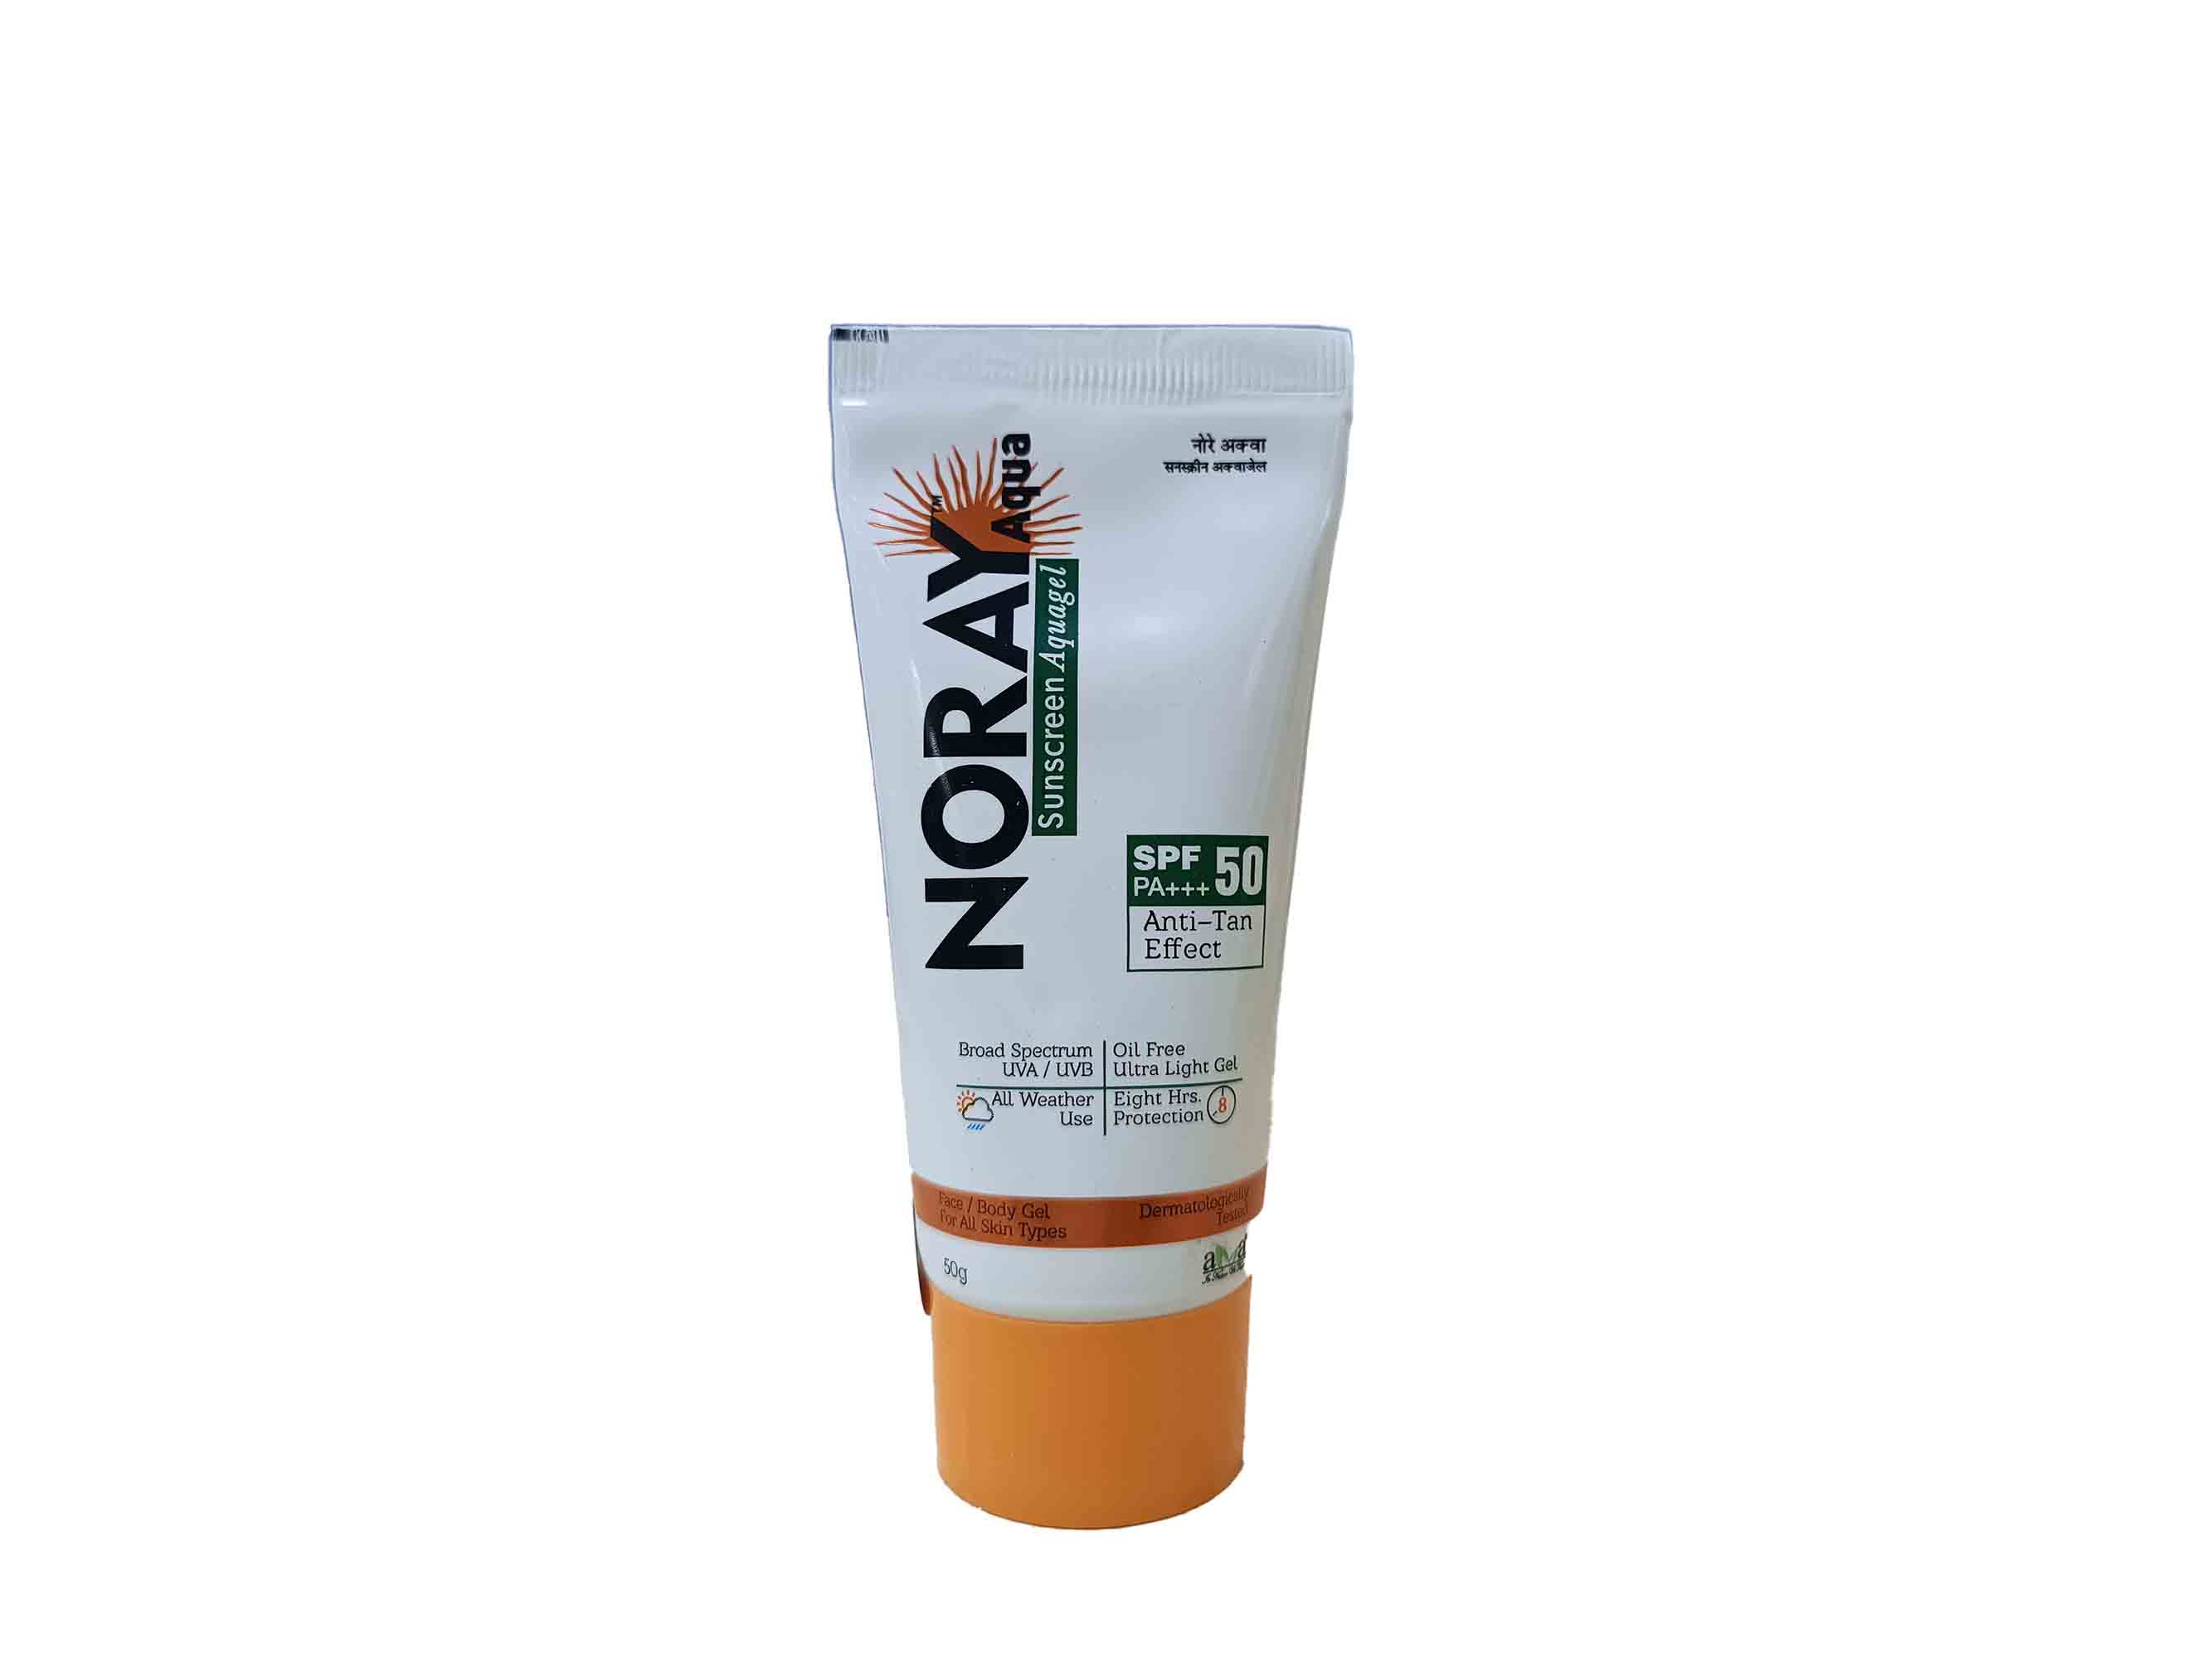 Vegetal Noray Aqua Sunscreen Aquagel SPF 50 PA+++